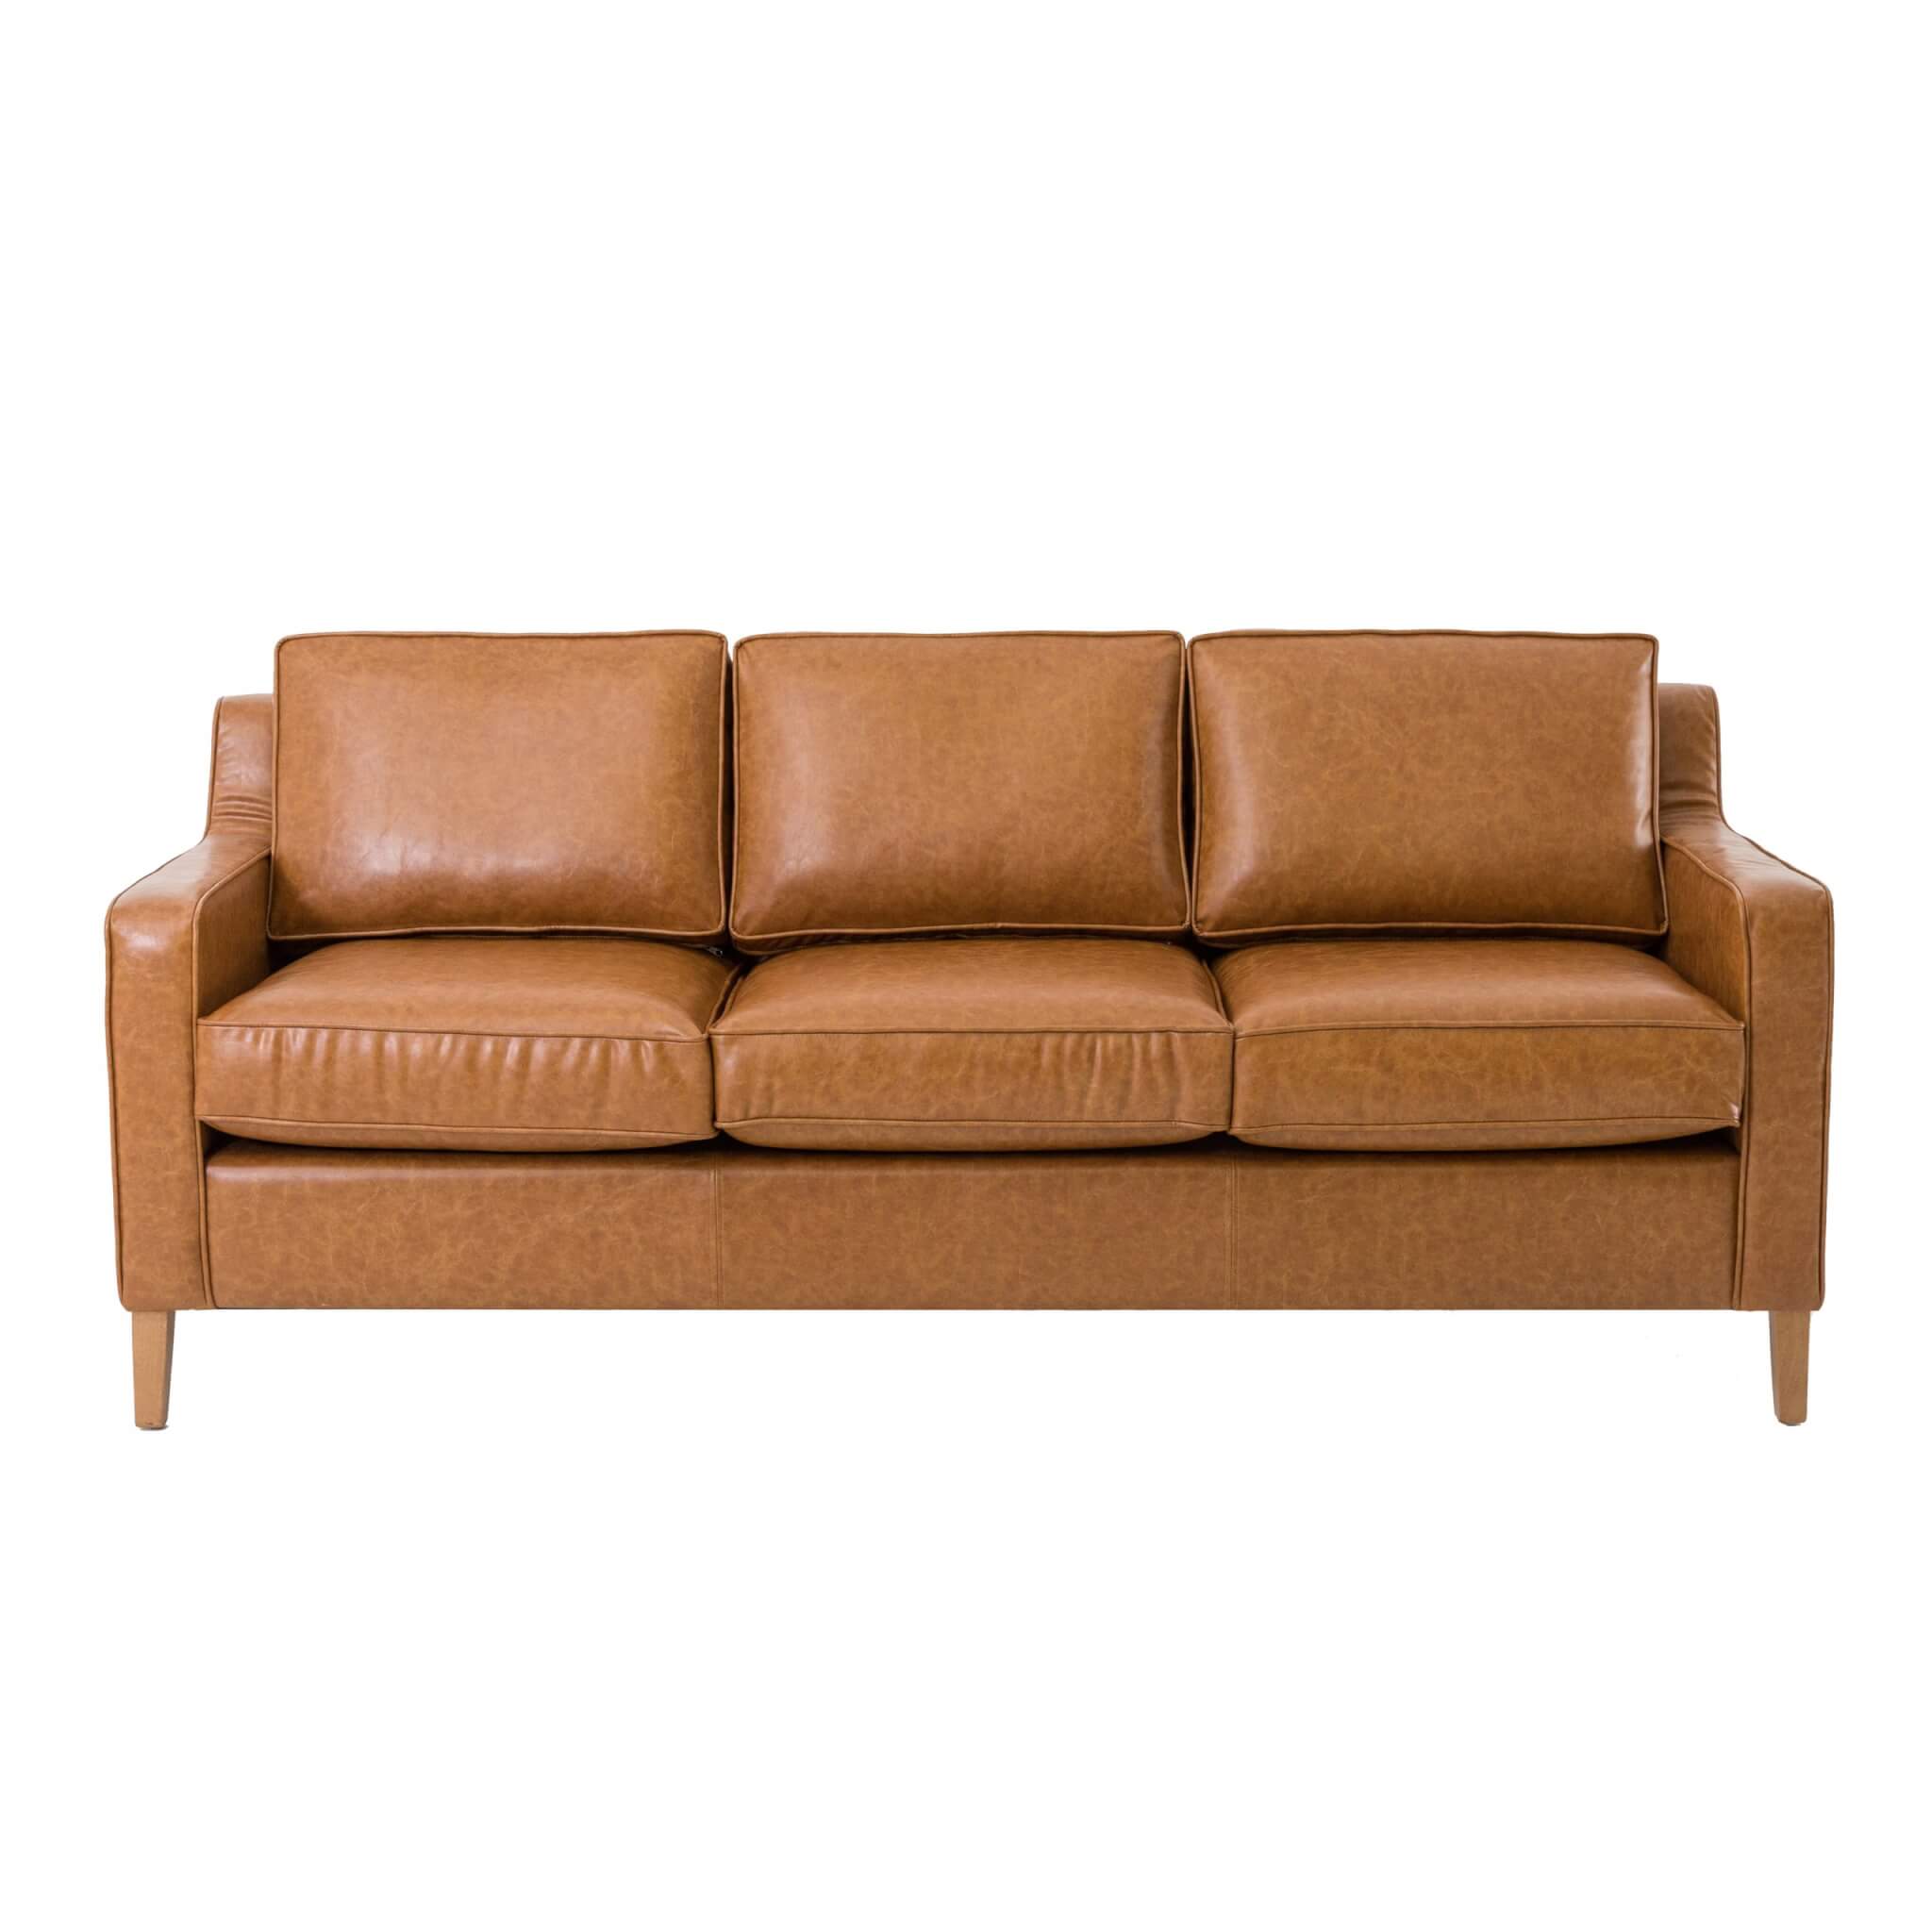 Aston Three Seater Lounge – Tan Leather Look – 205cmL x 85cmW x 82cmH